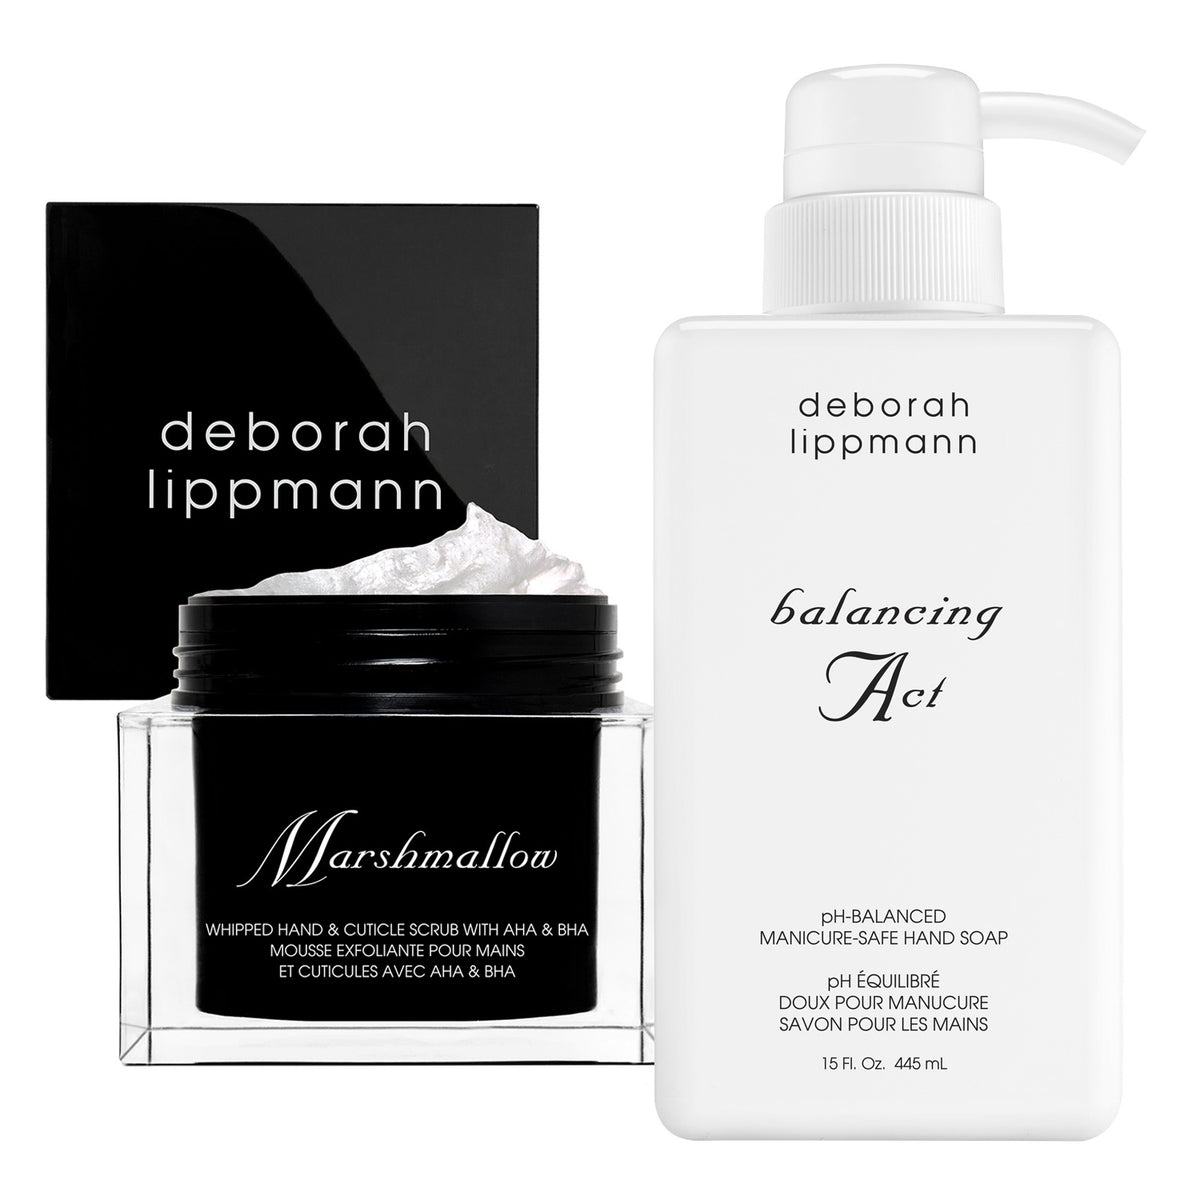 Marshmallow Hand Scrub and Balancing Act Soap Bundle - Deborah Lippmann